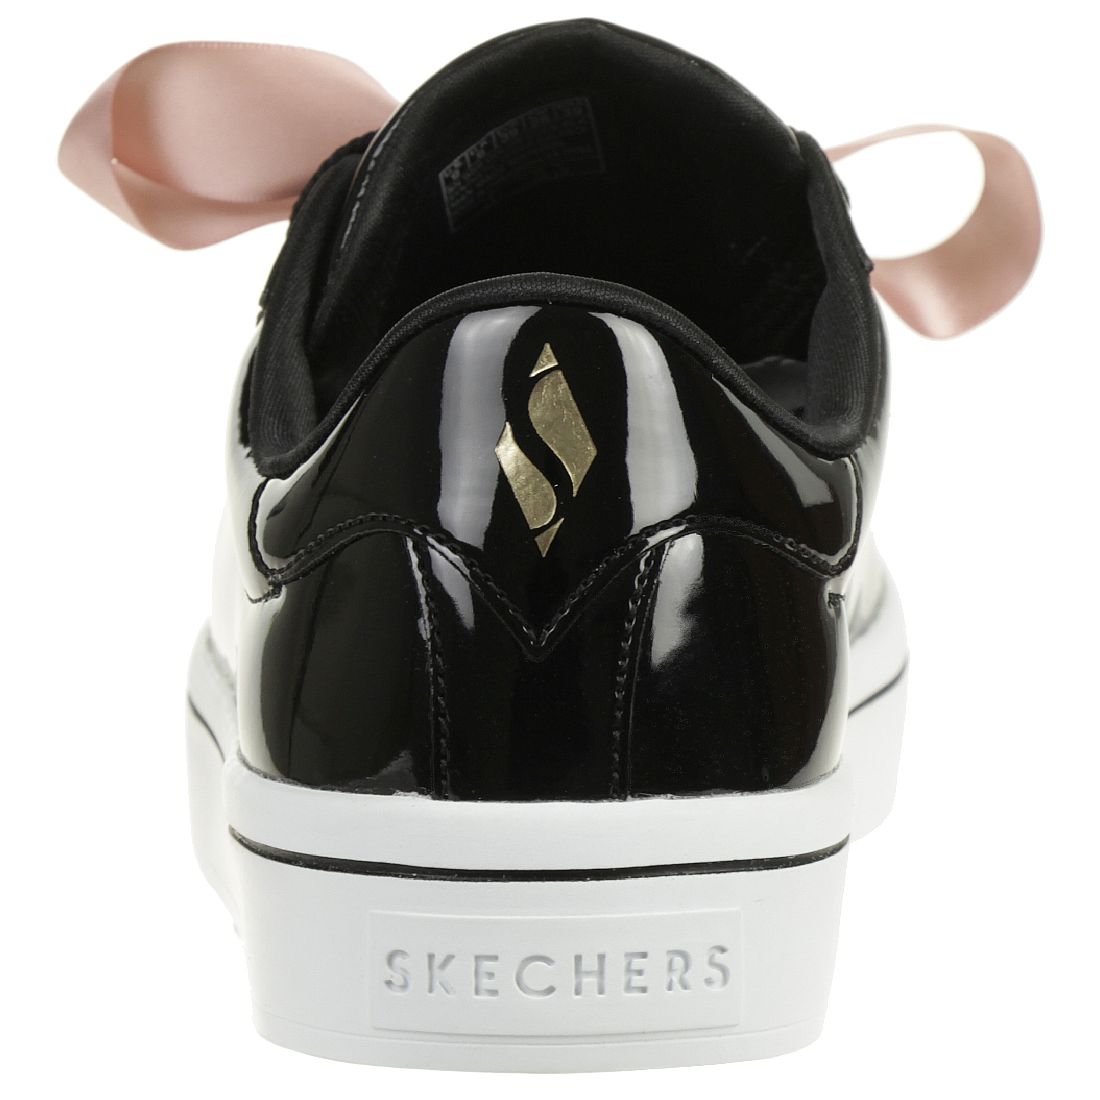 Skechers Hi-Lites SLICK SHOES Damen Sneaker schwarz Lack 959 BLK